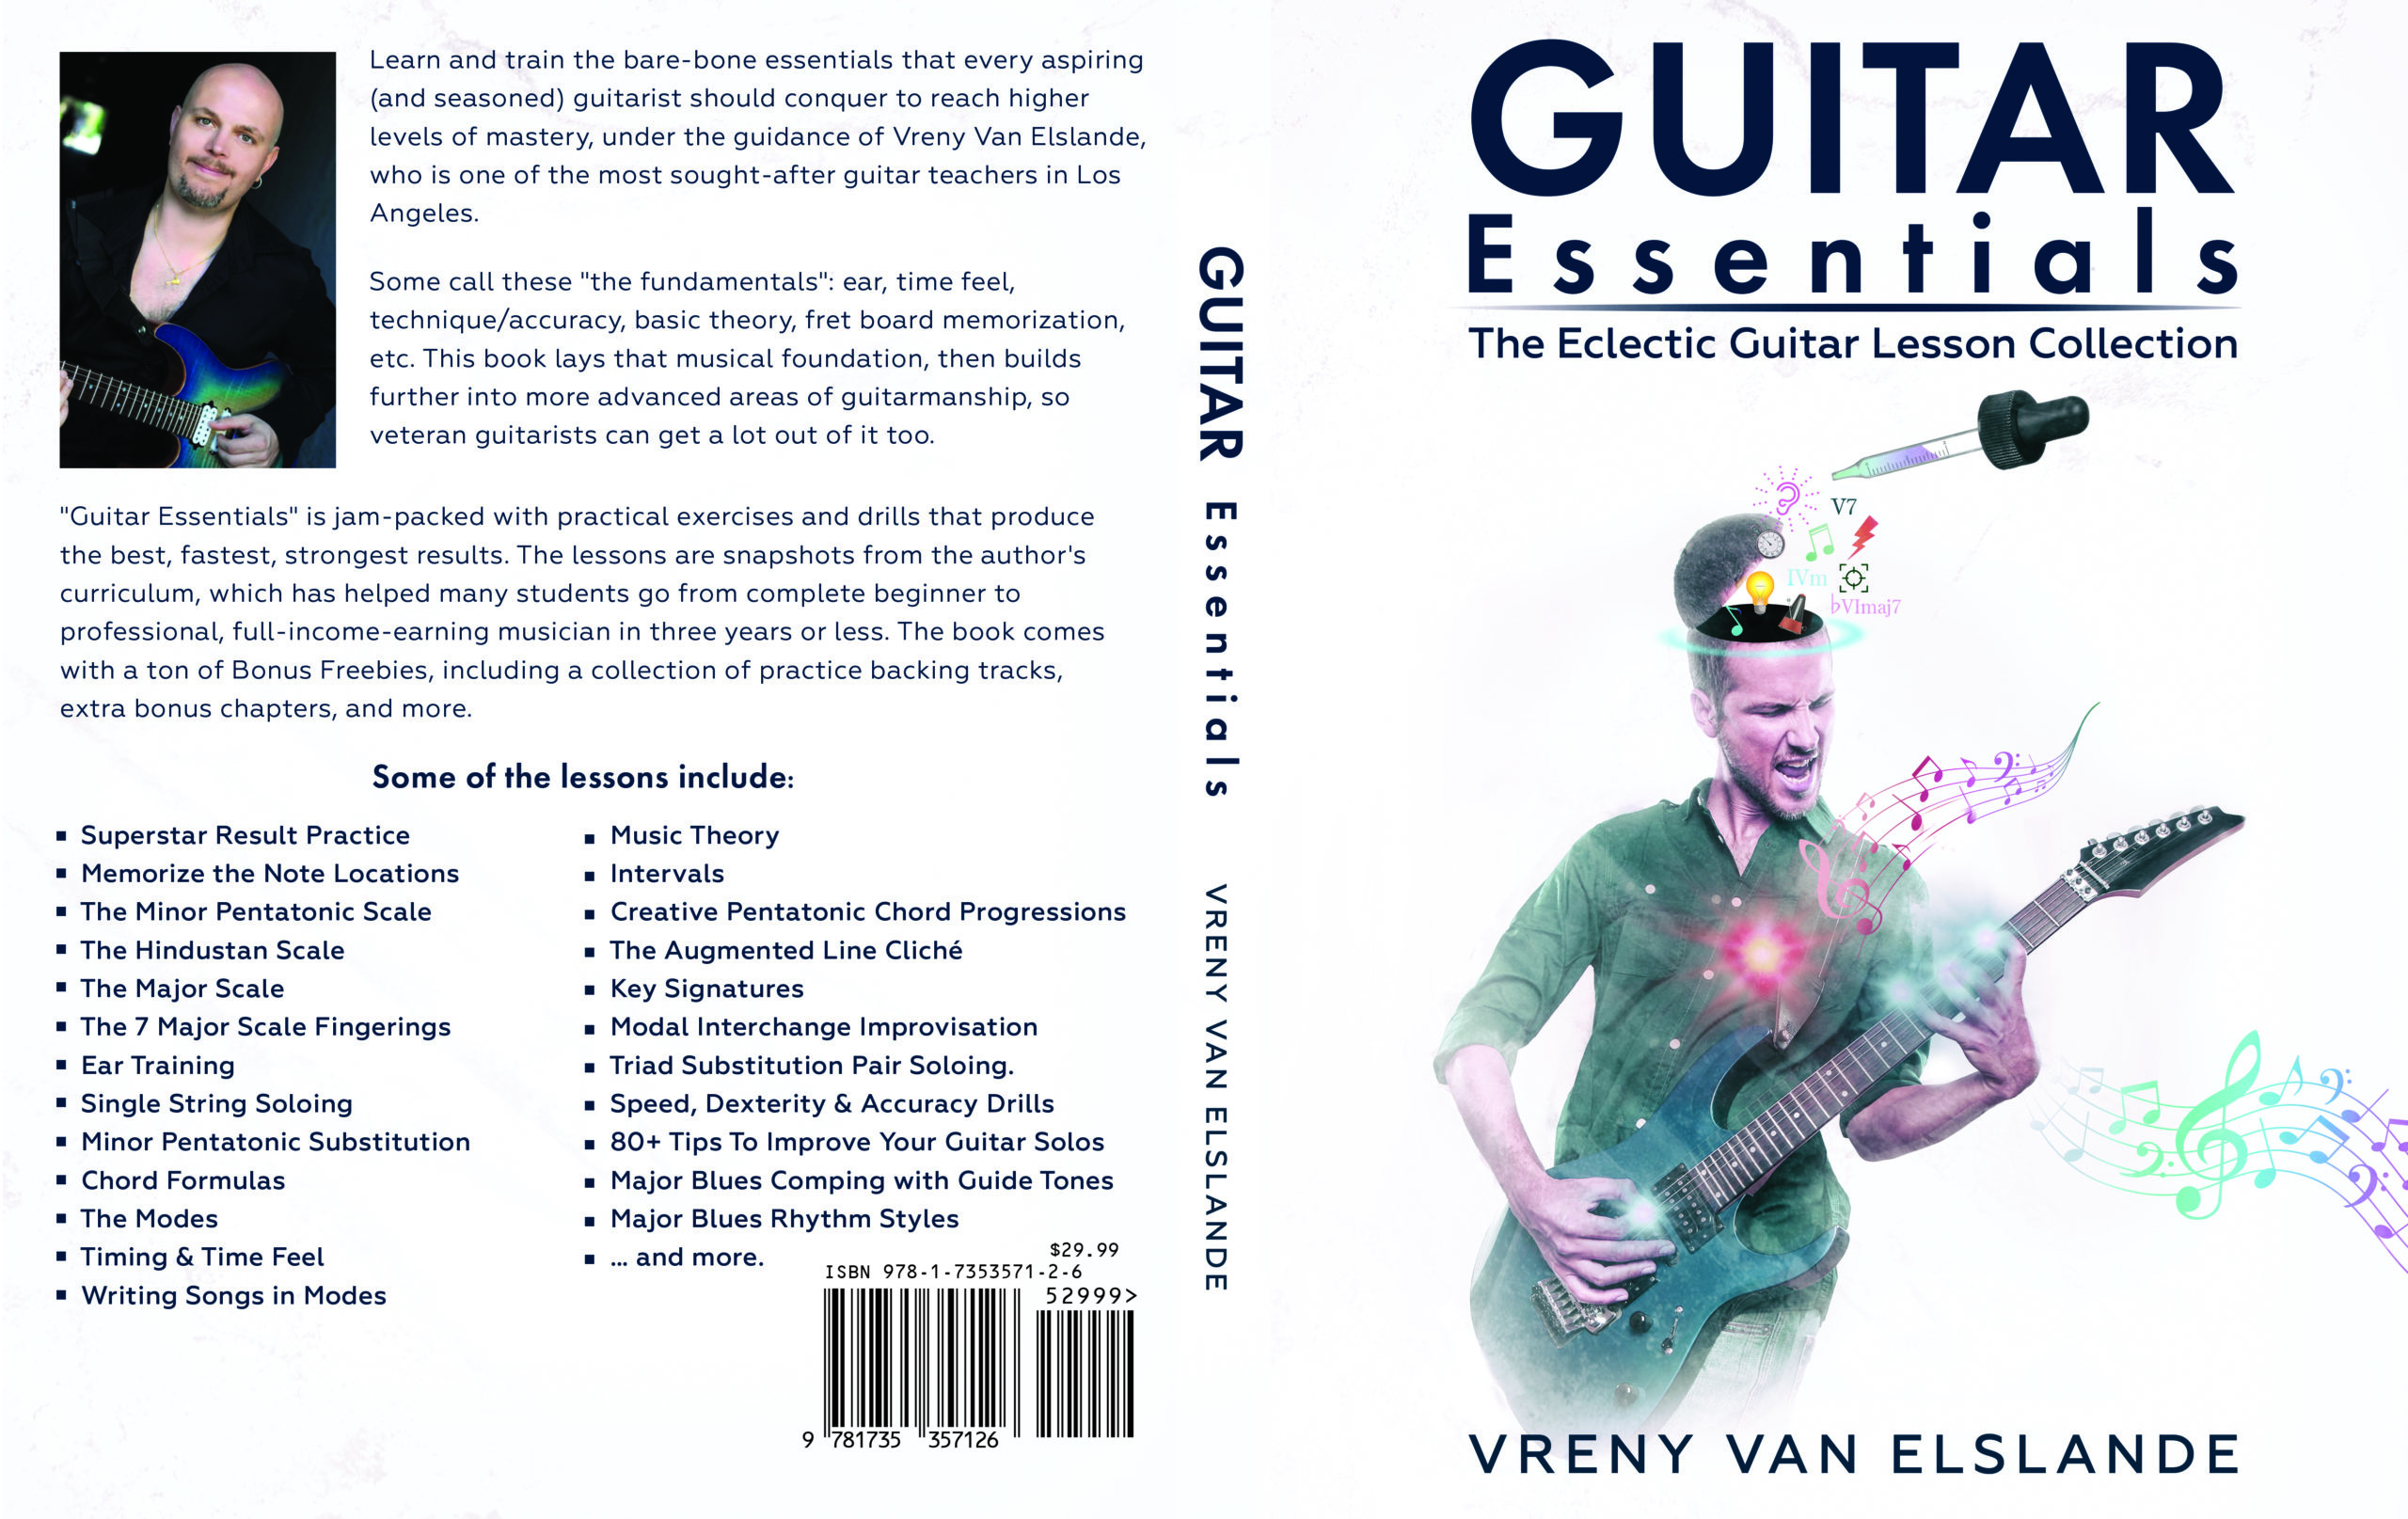 The cover artwork of Vreny Van Elslande's book Guitar Essentials